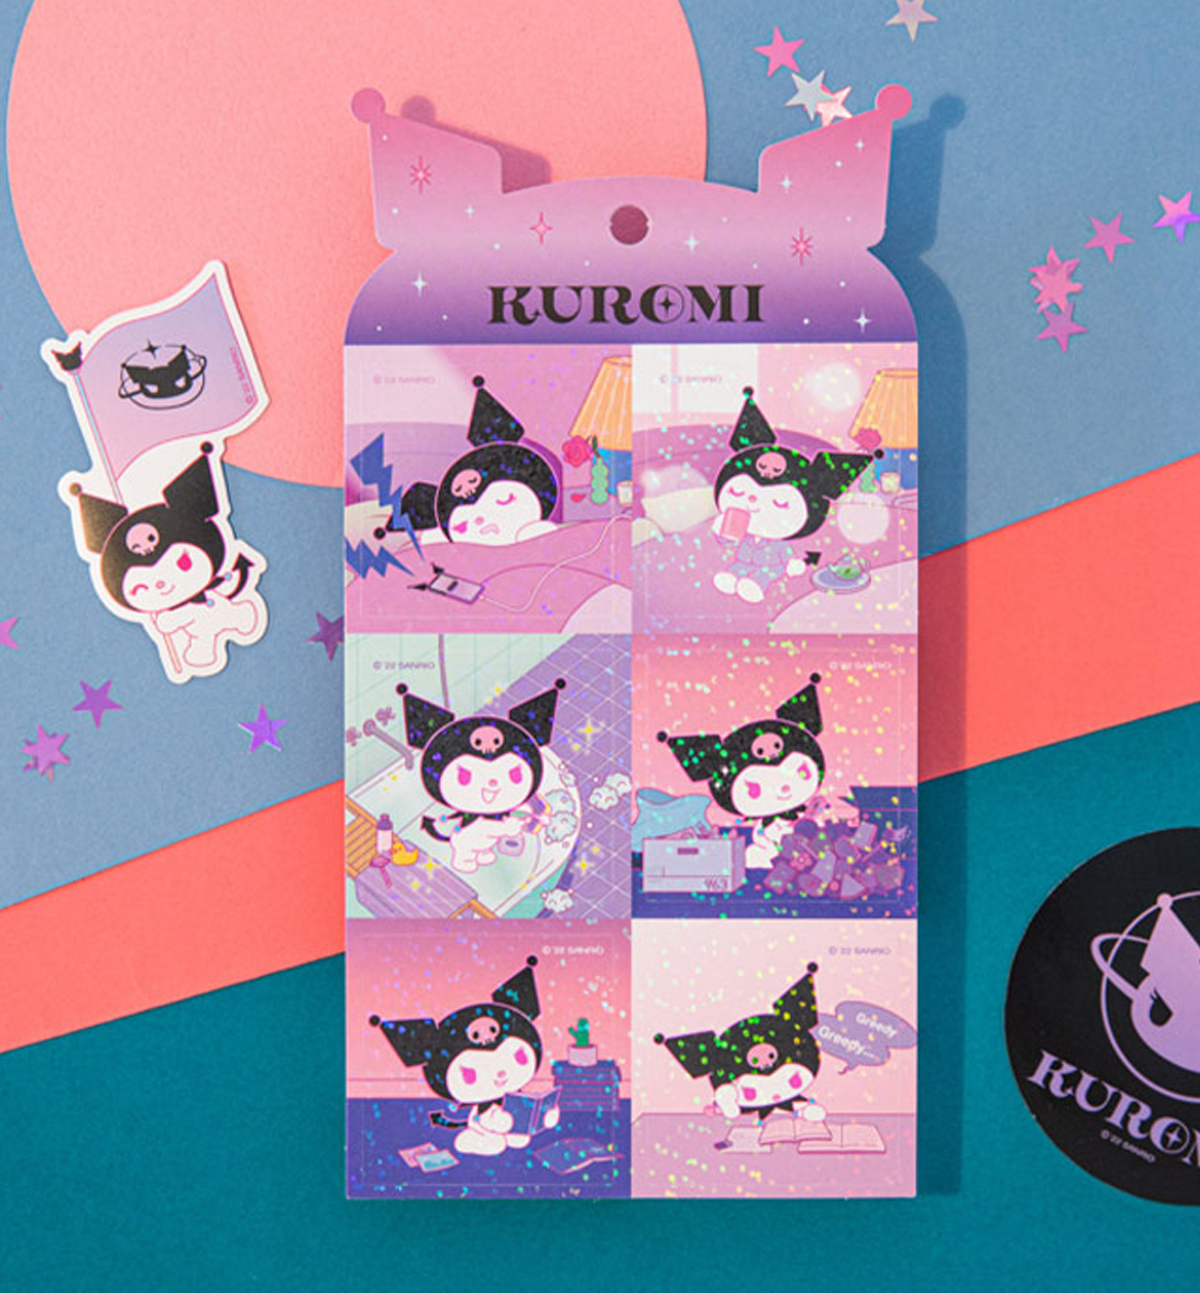 Hello Kitty Transparent Deco Sticker [Strawberry]